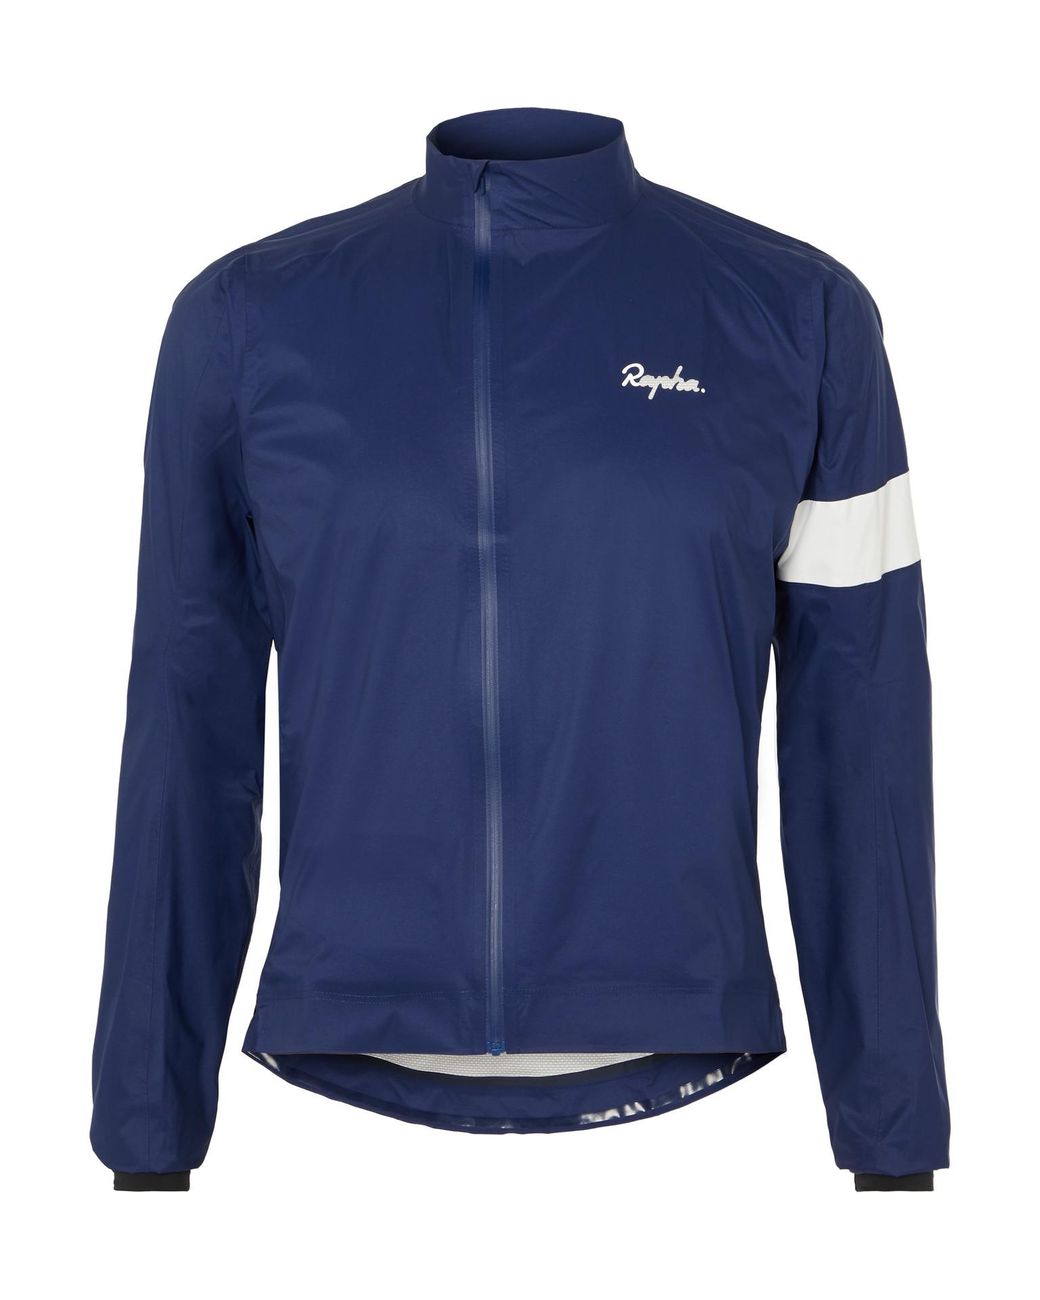 Rapha Synthetic Core Rain Ii Nylon Cycling Jacket in Blue for Men - Lyst